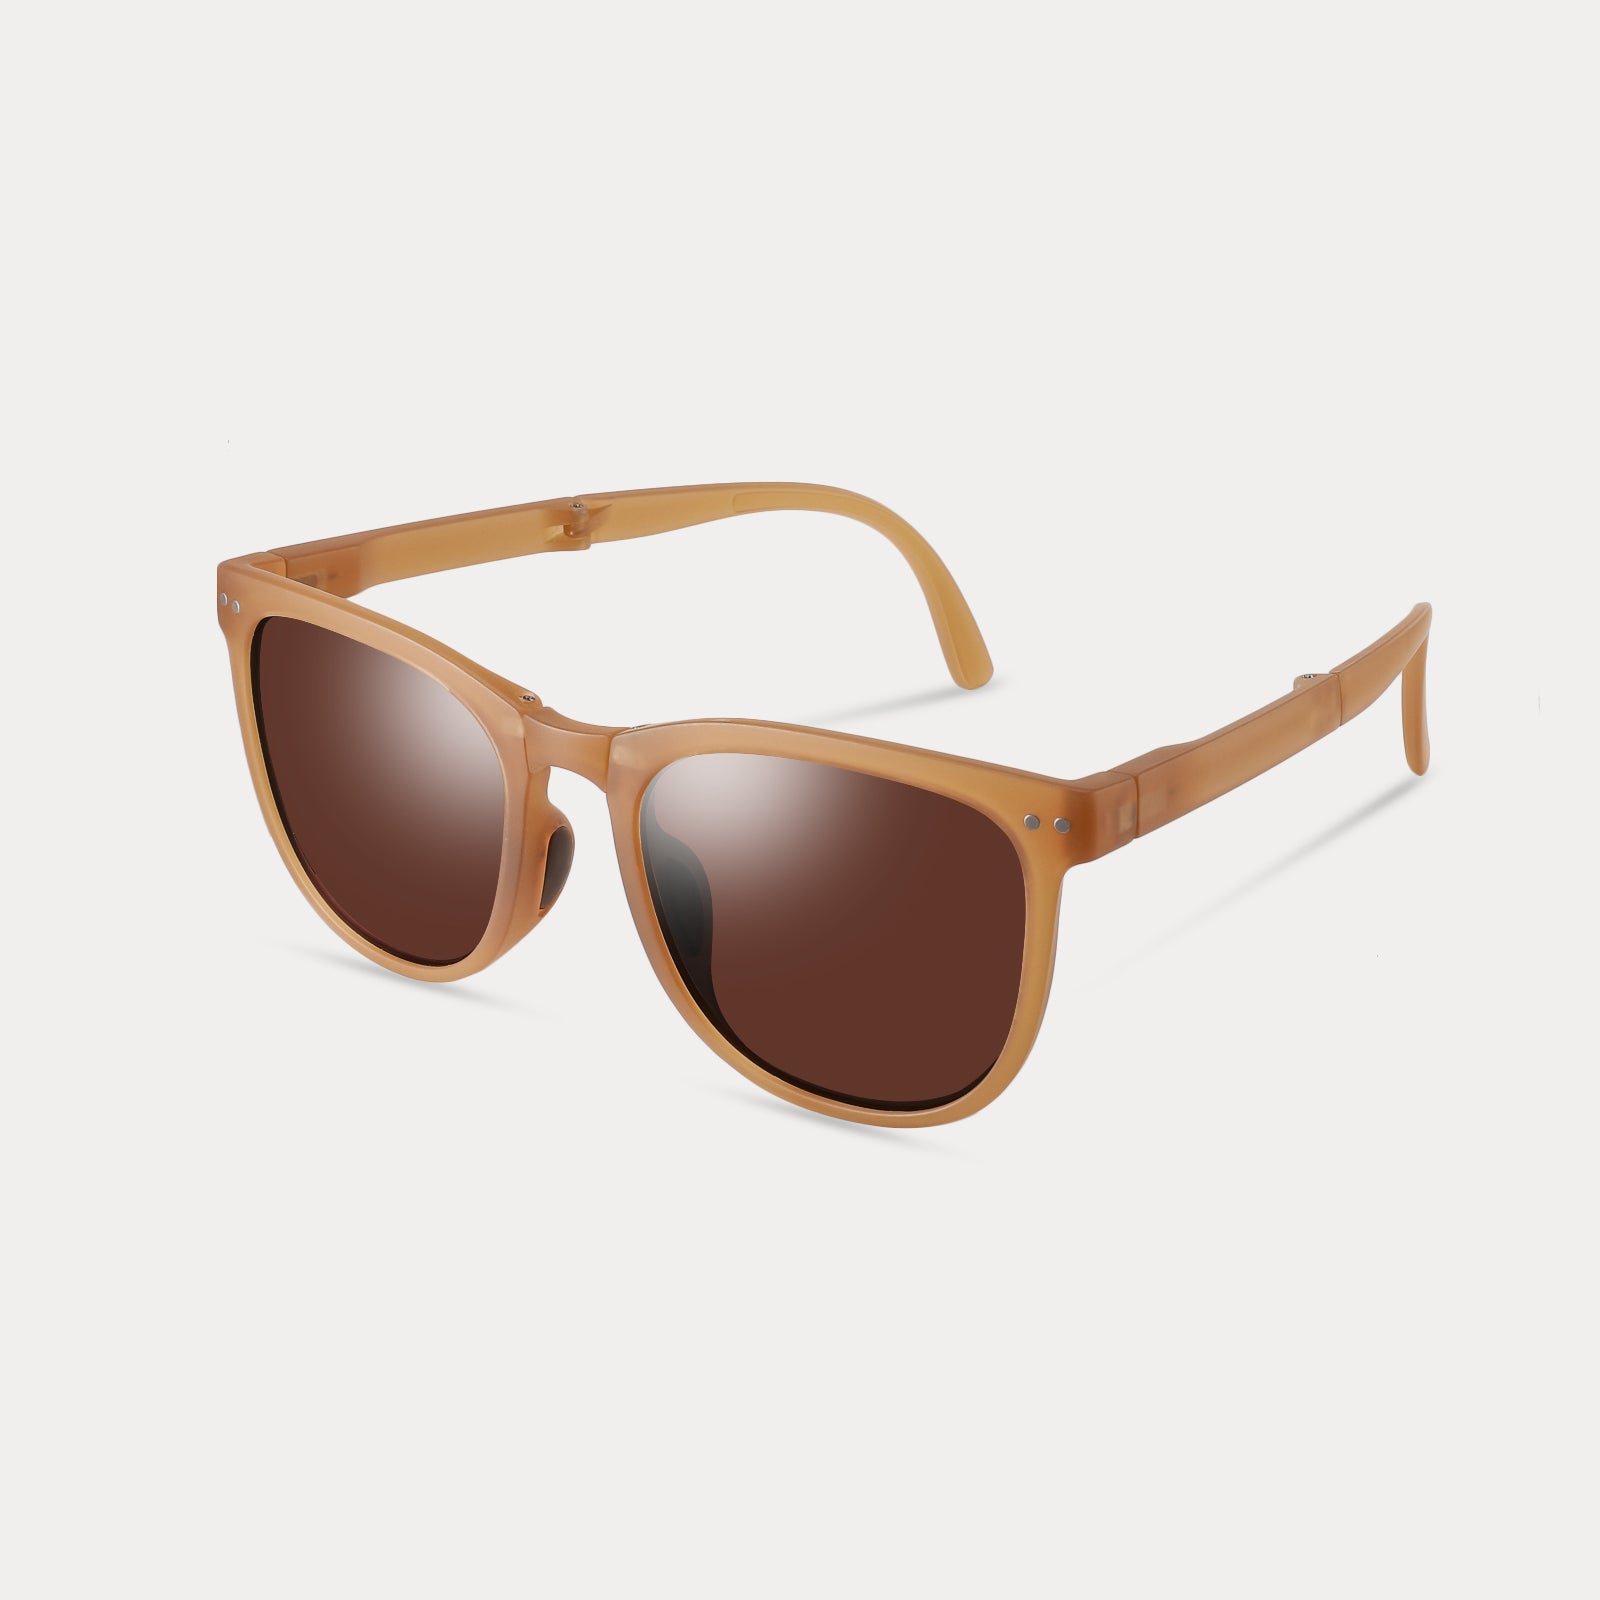 Brown Folding Fashion Sunglasses